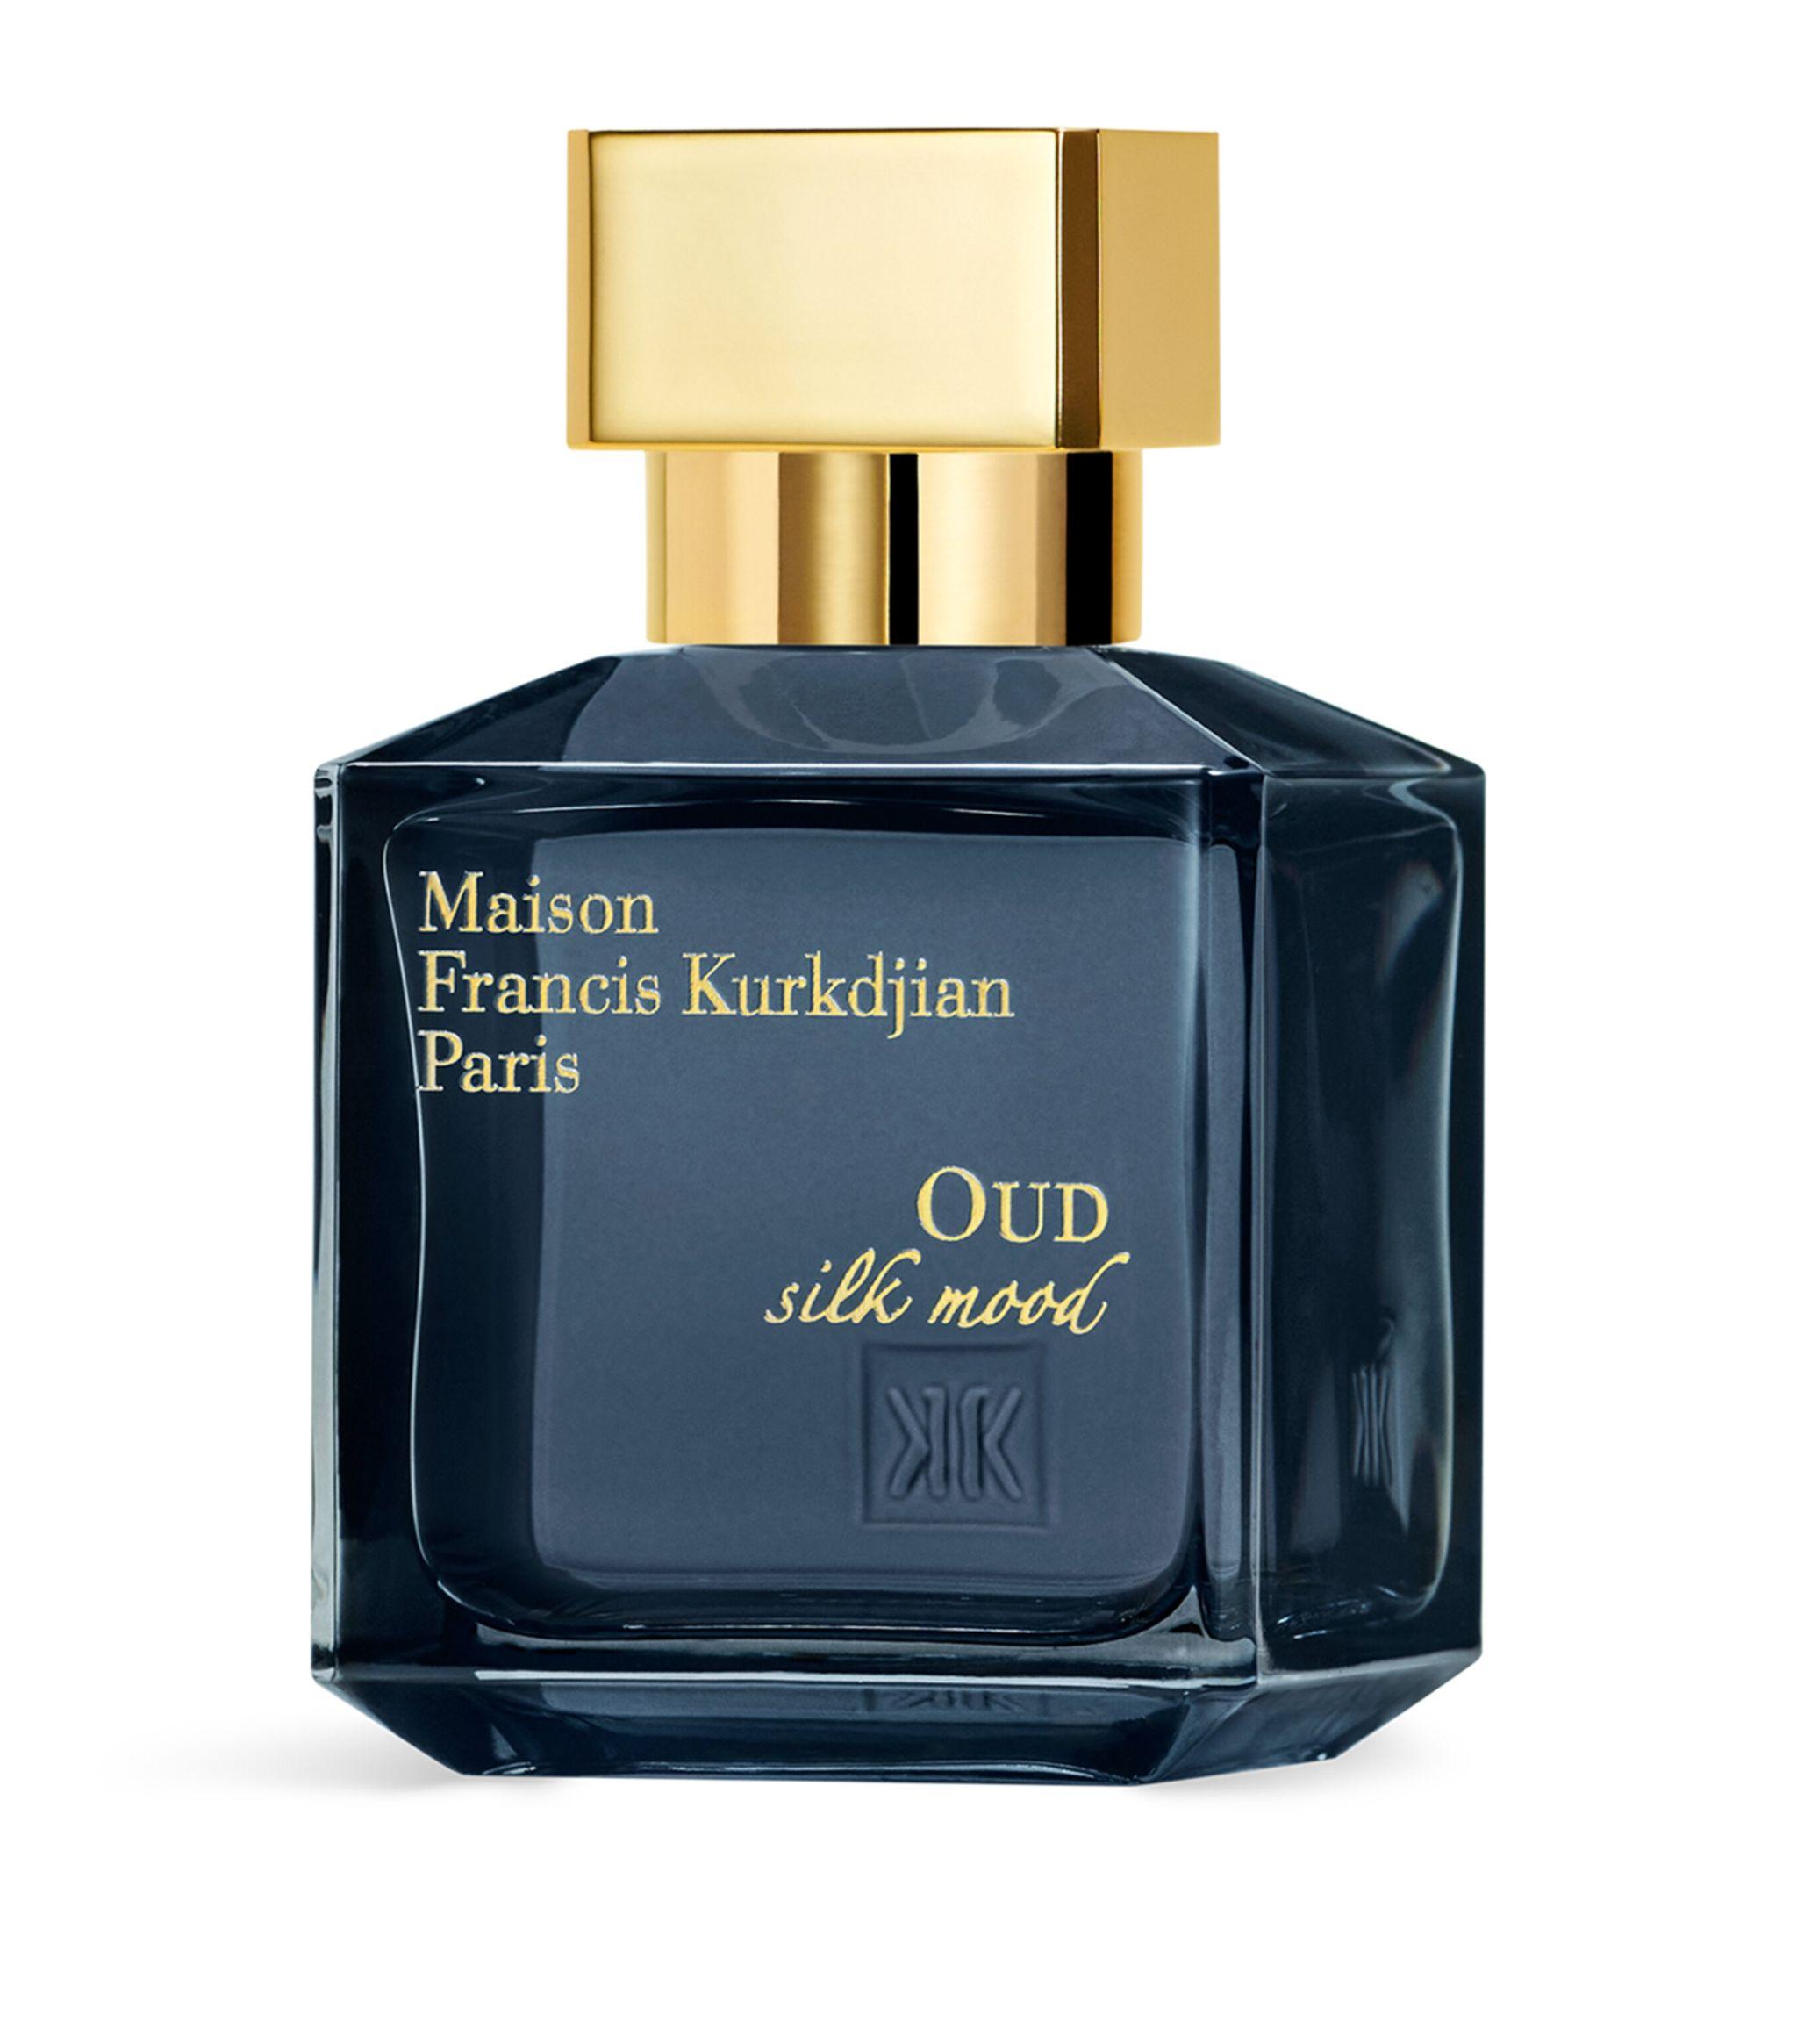 Maison Francis Kurkdjian Oud Silk Mood (U) Edp 70ml - undefined - TheFirstScent -Hong Kong